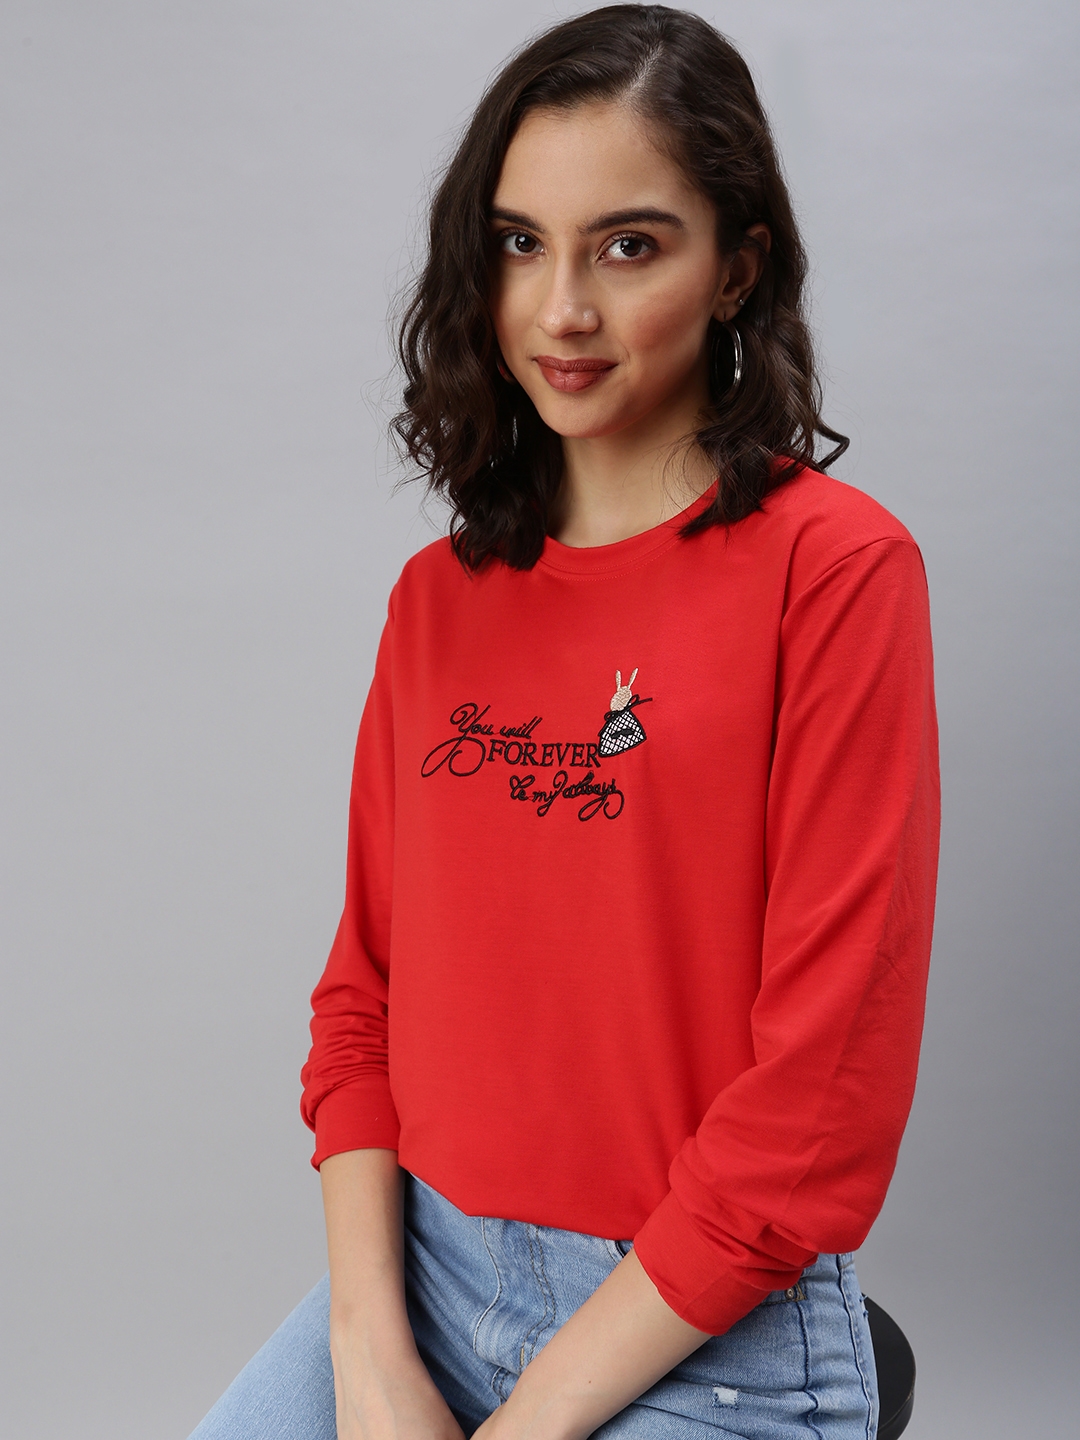 Women's Red Cotton Solid Sweatshirts